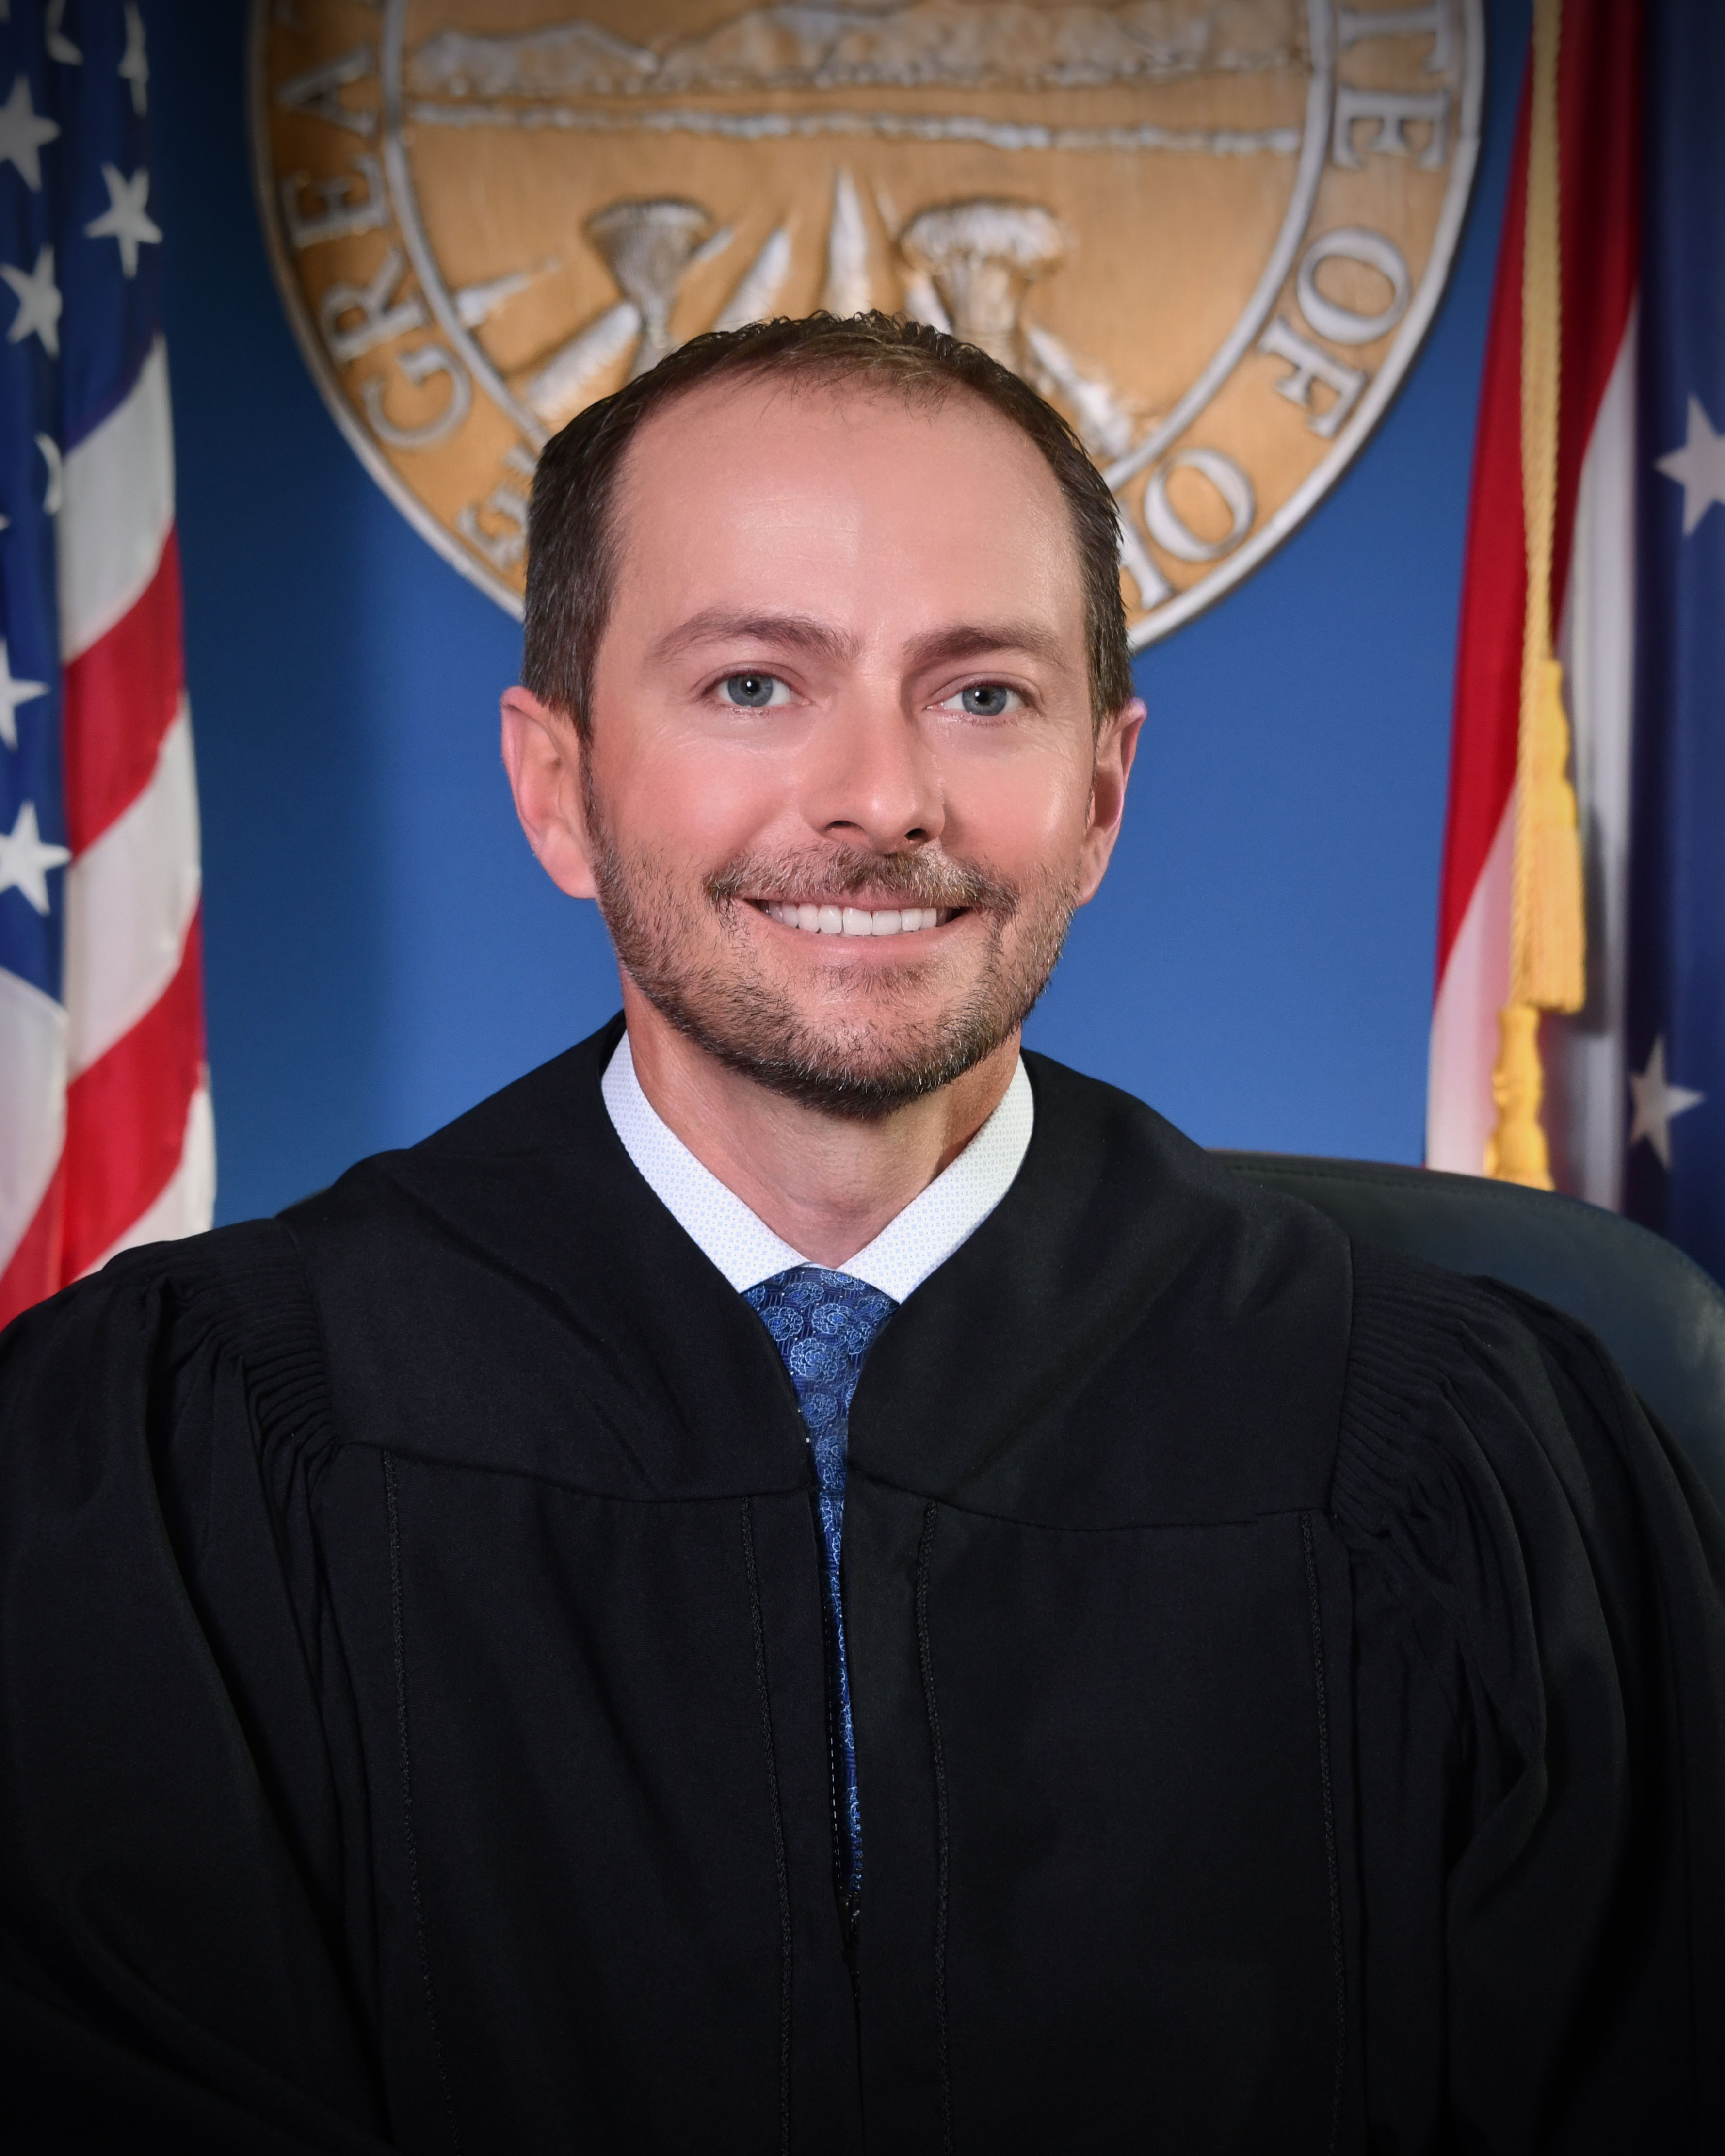 Judge Jon Oldham